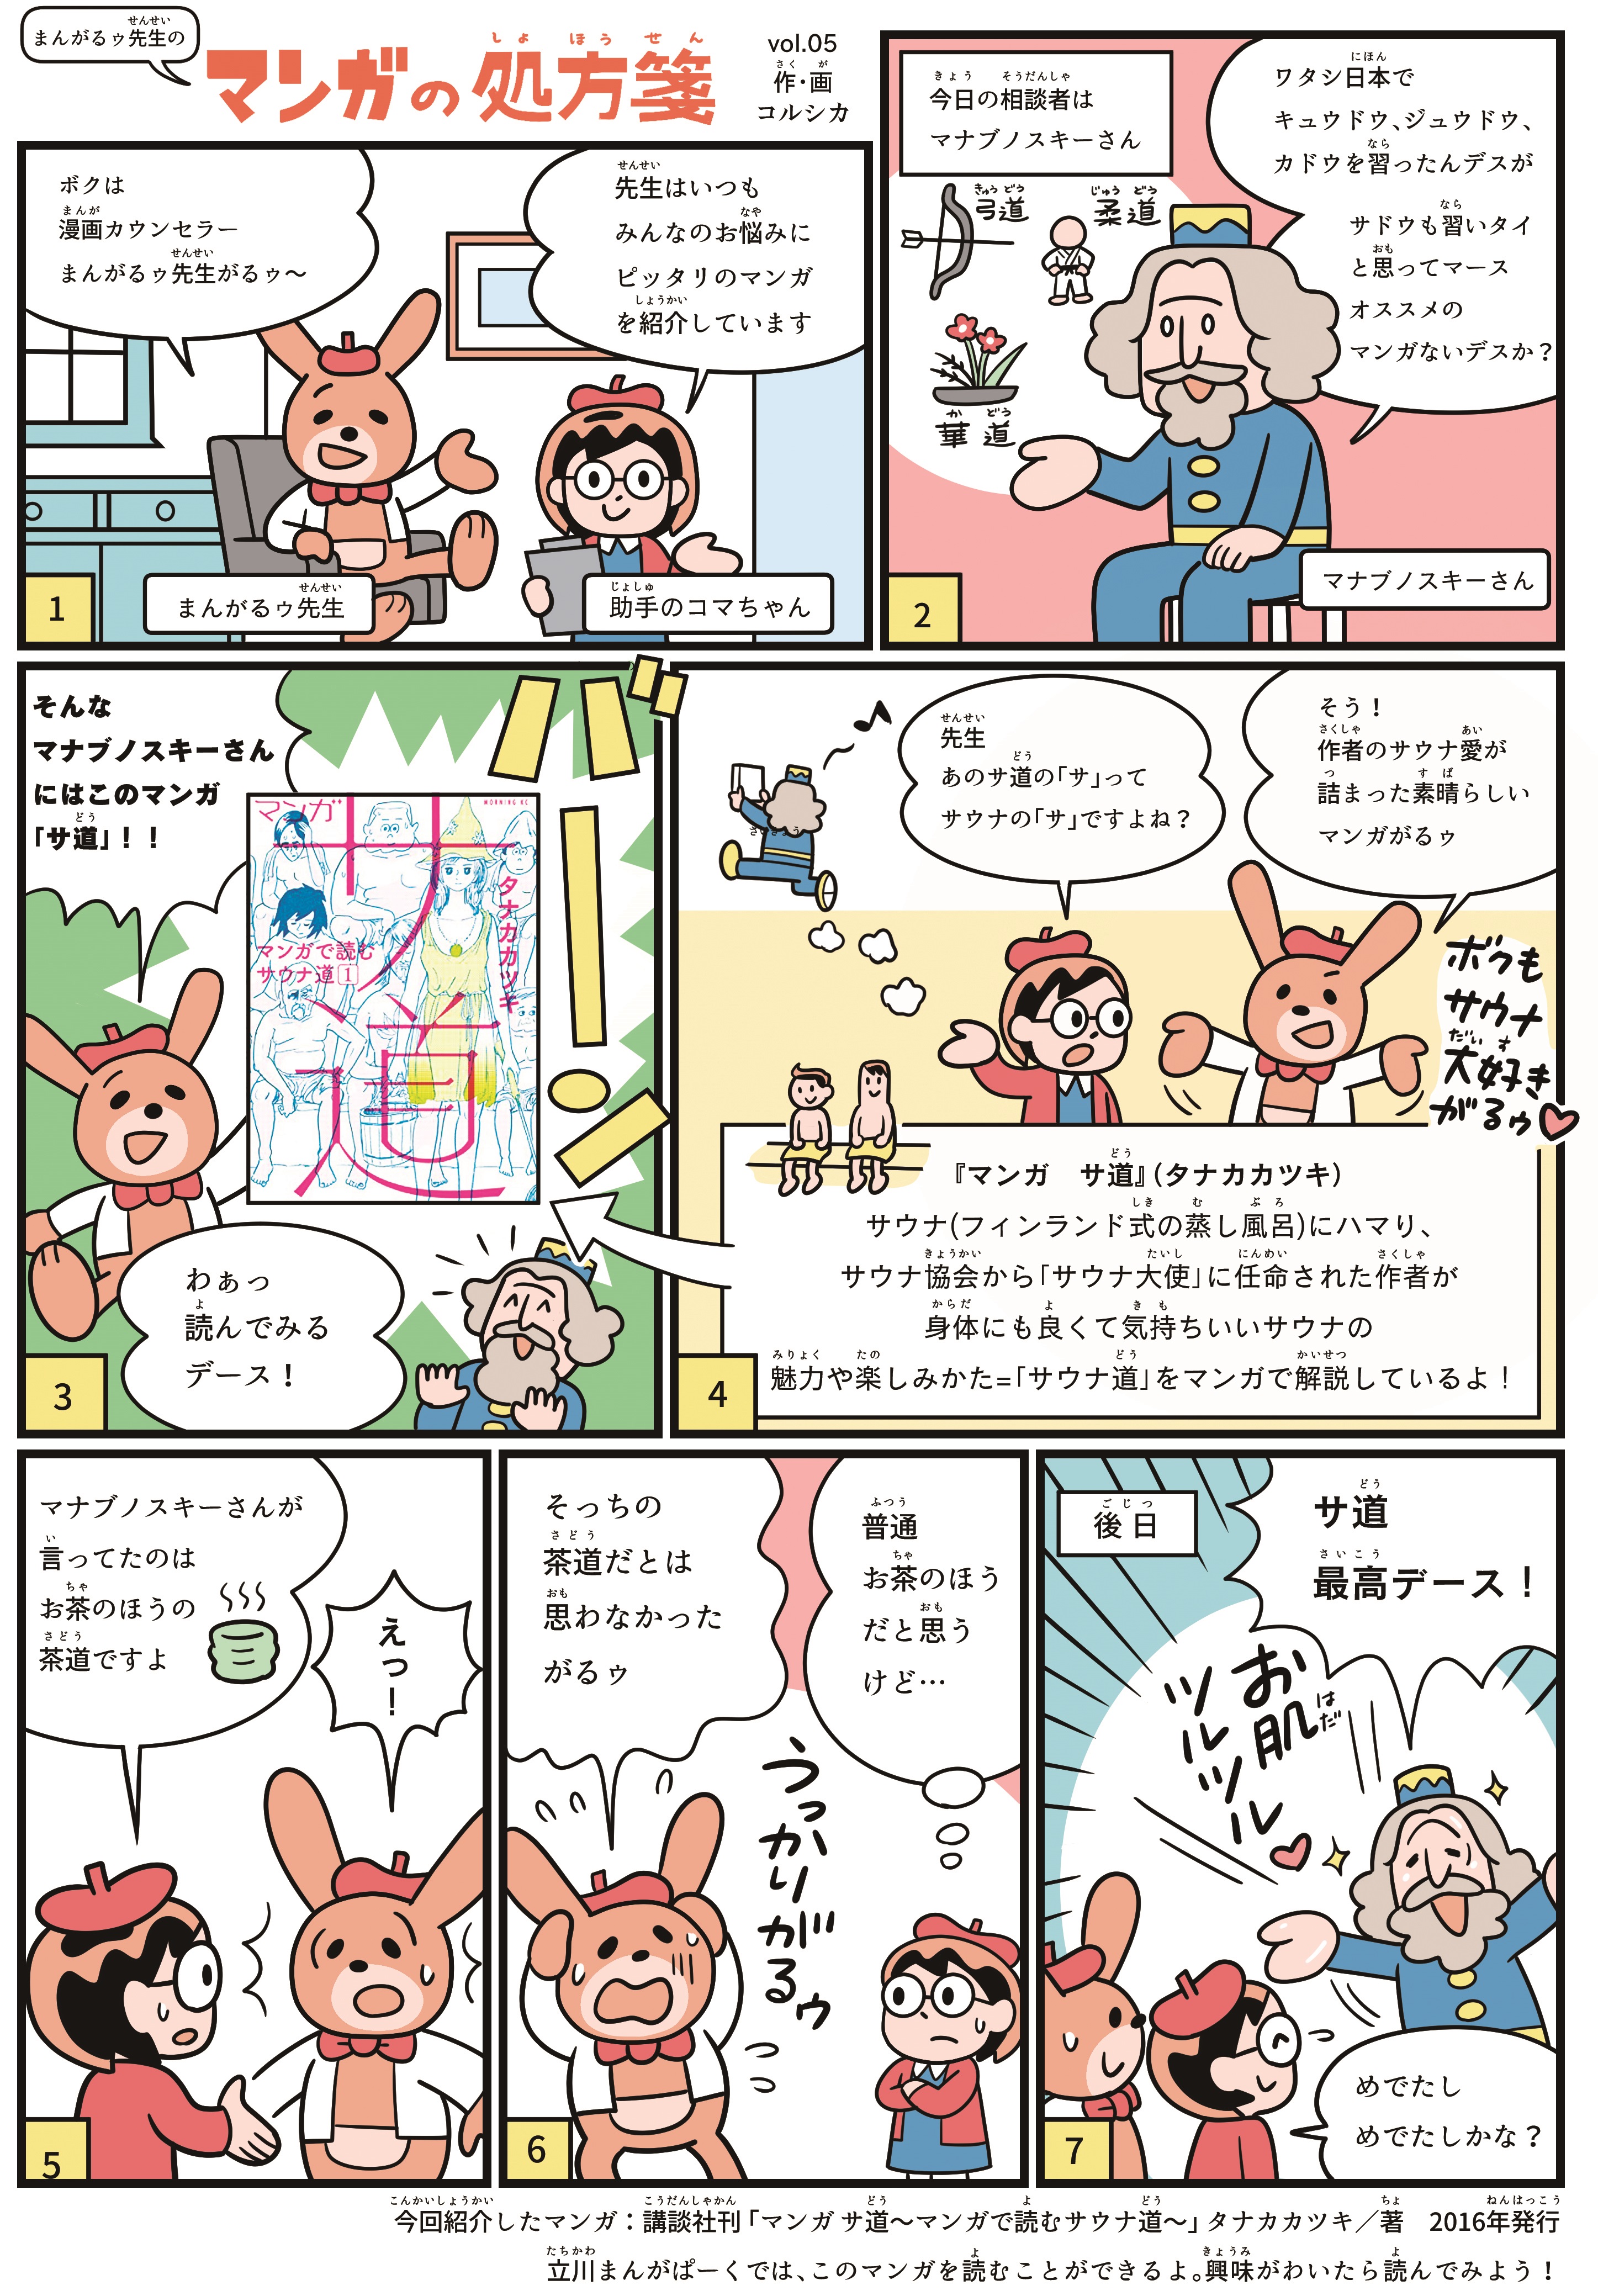 https://mangapark.jp/topics/2019/02/25/images/mangaroosensei_vol05mangaroo_05-001.jpg